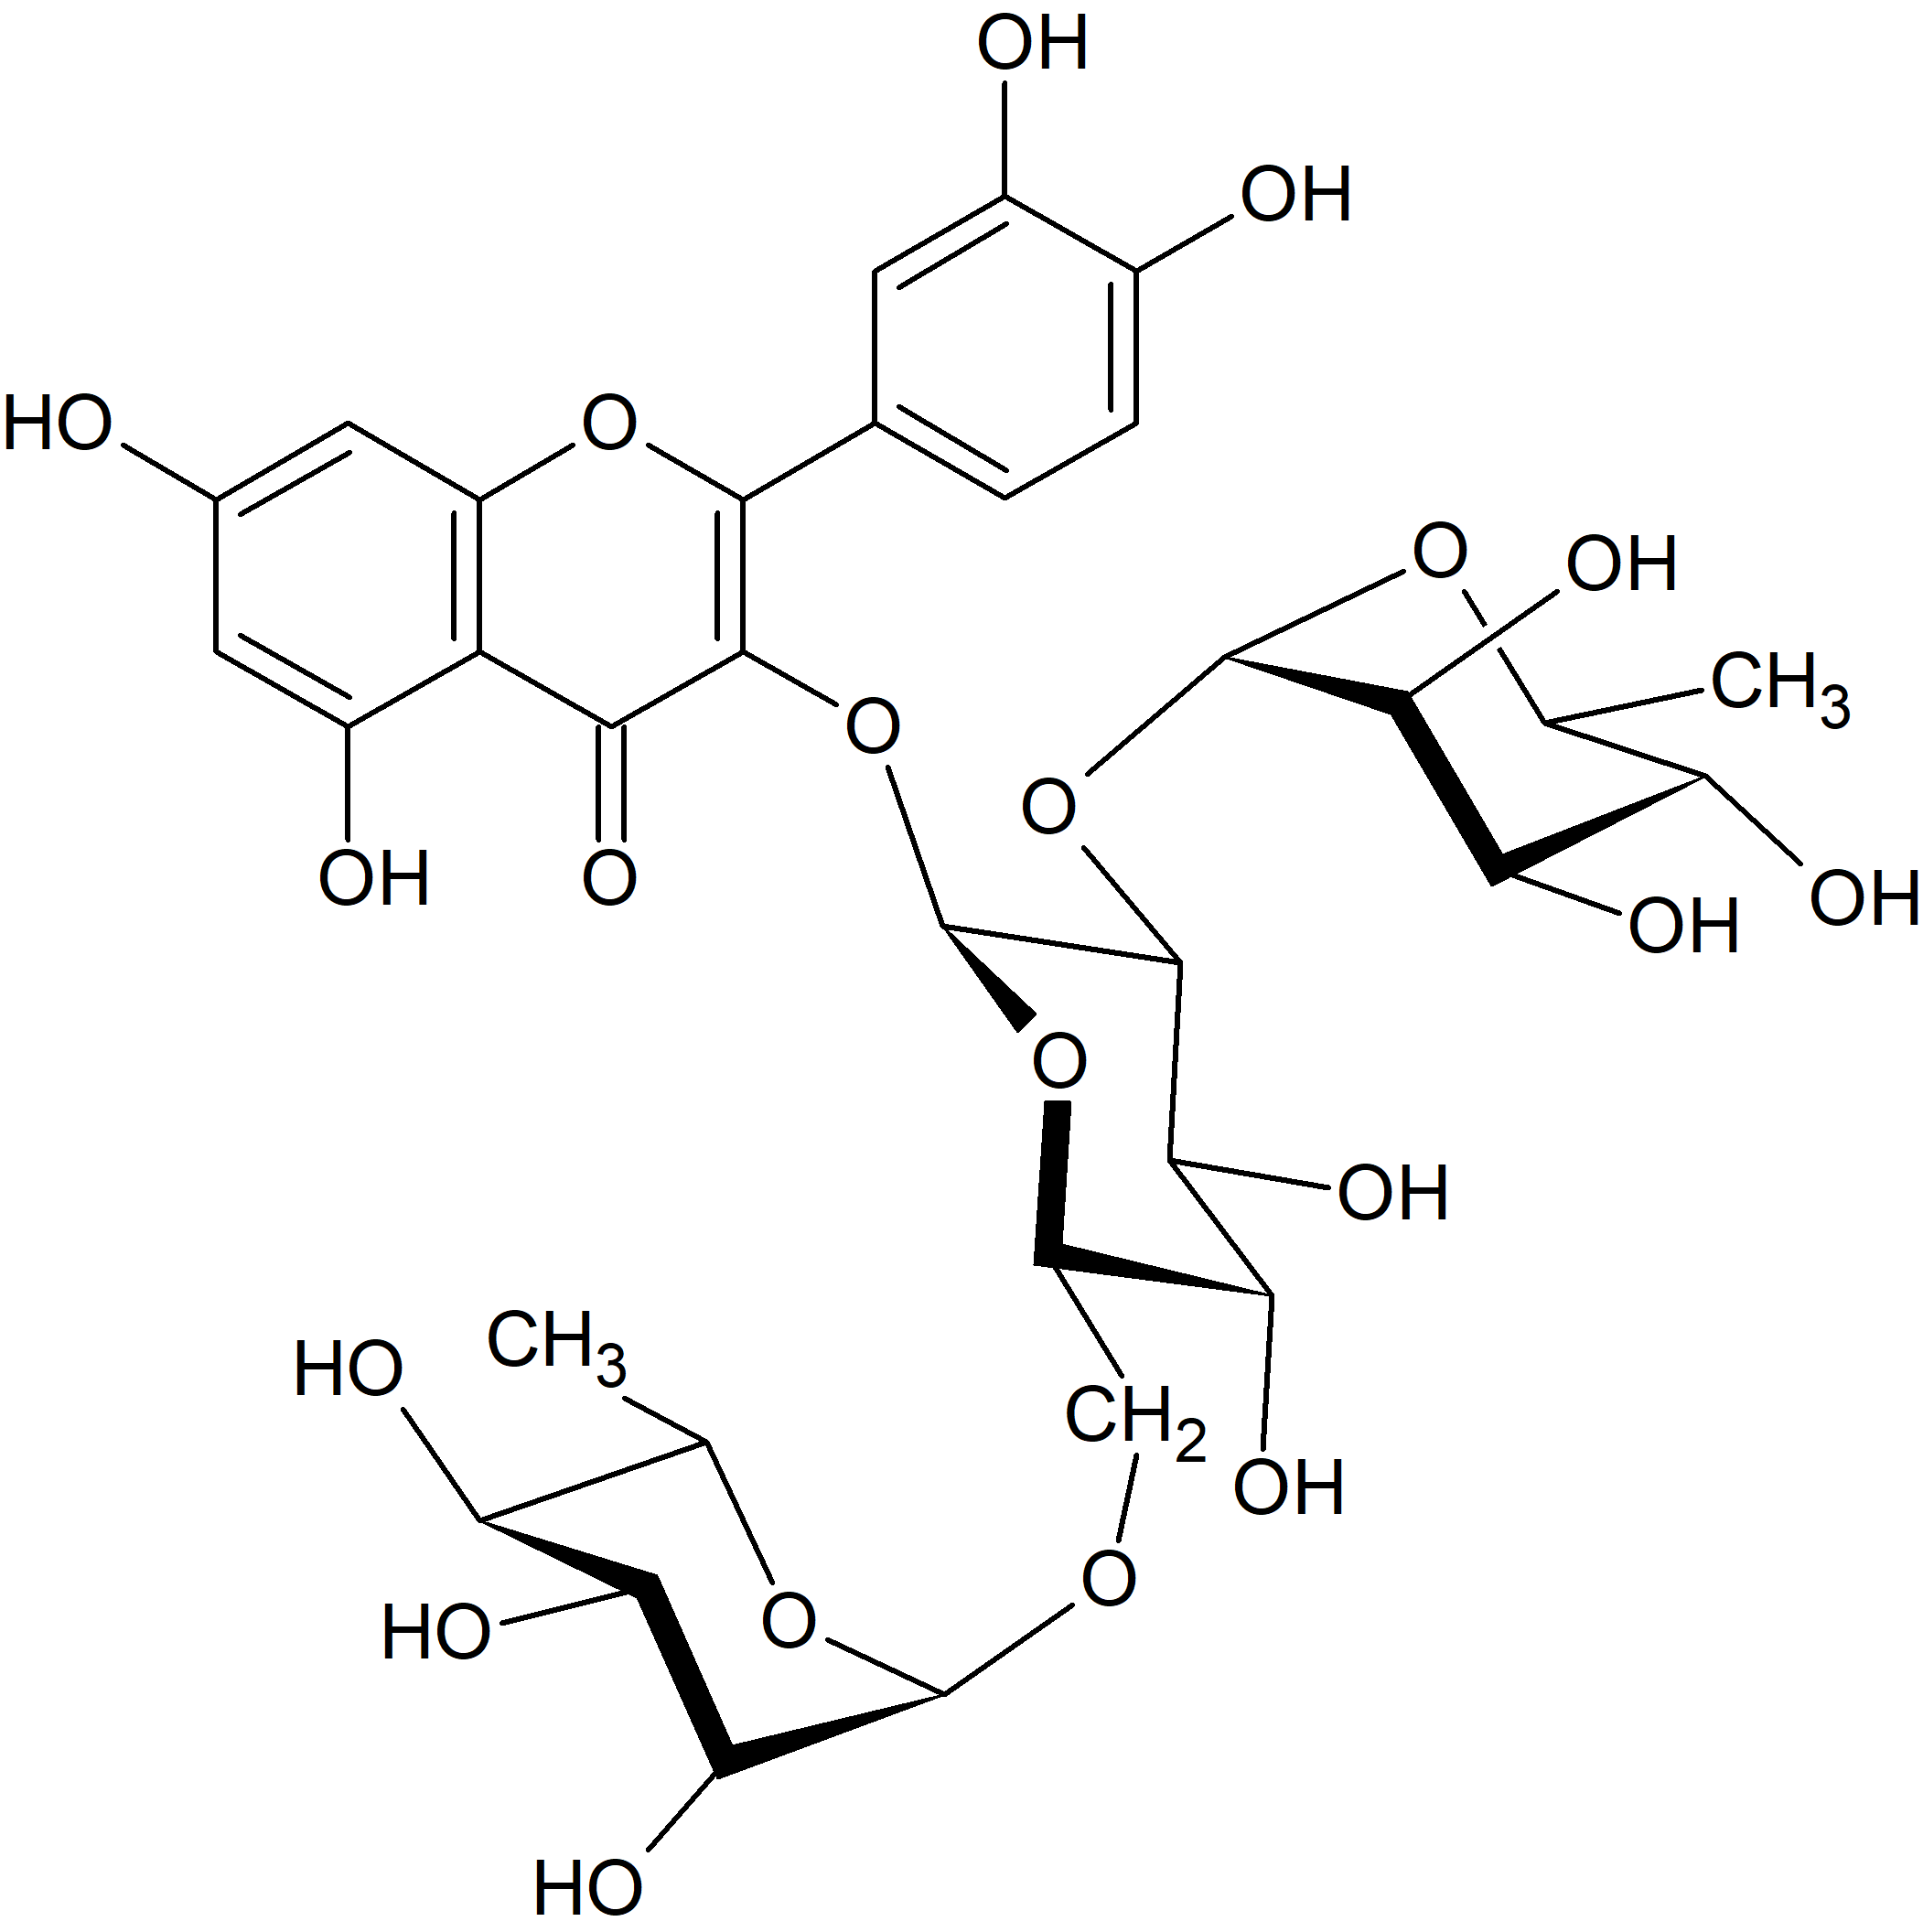 Quercetin 3-O-(2'',6''-dirhamnosyl)glucoside